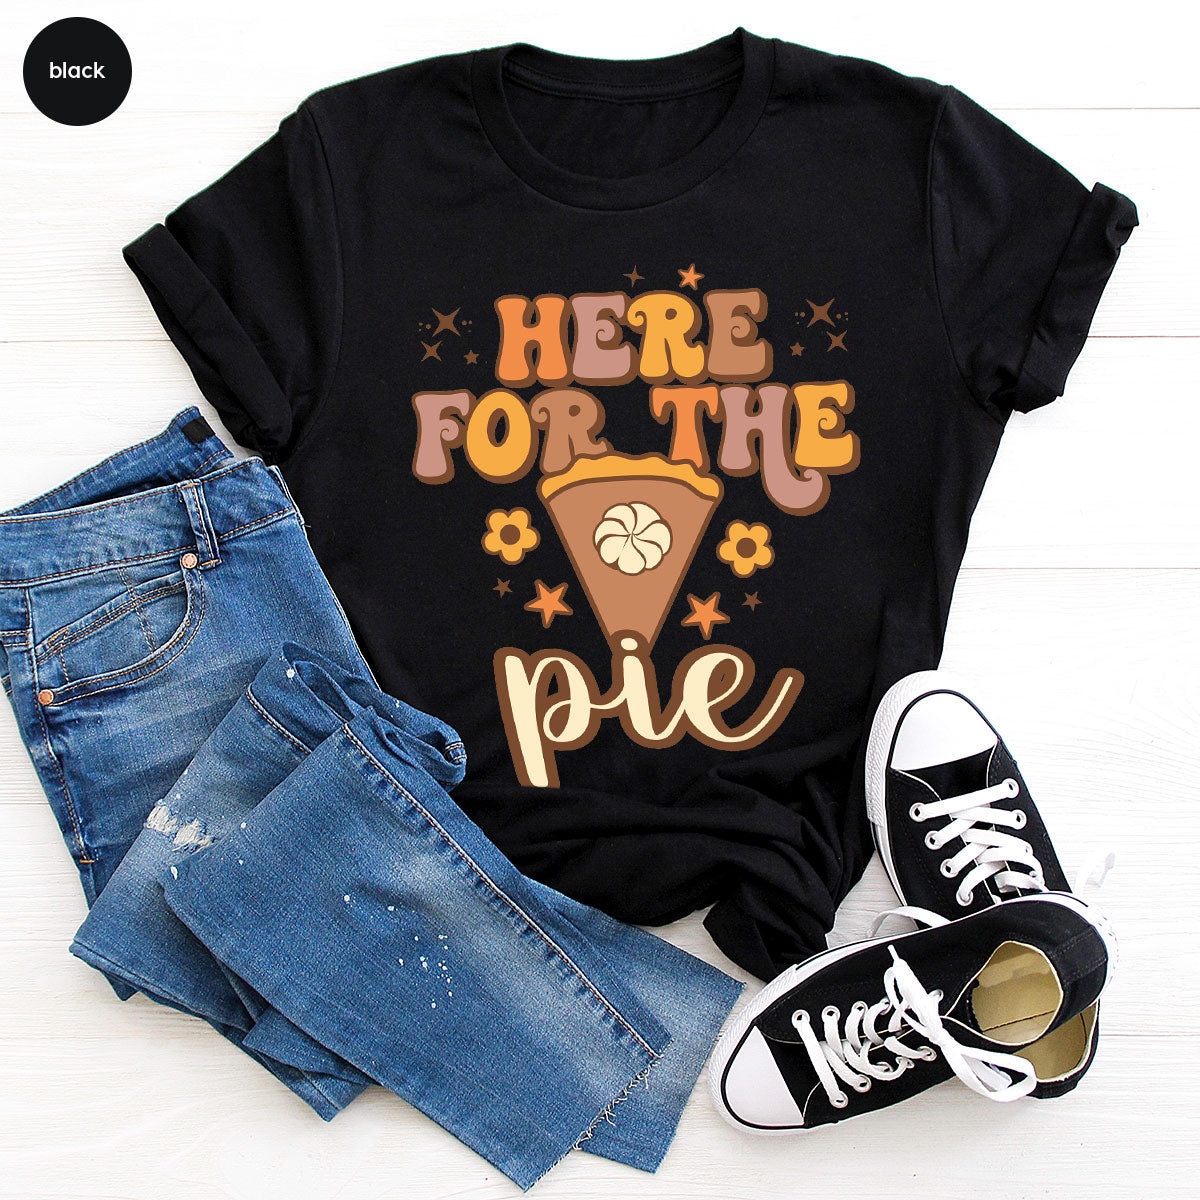 Here For The Pie Shirt, Funny Halloween Shirt, Cute Halloween Hoodie and Sweatshirt